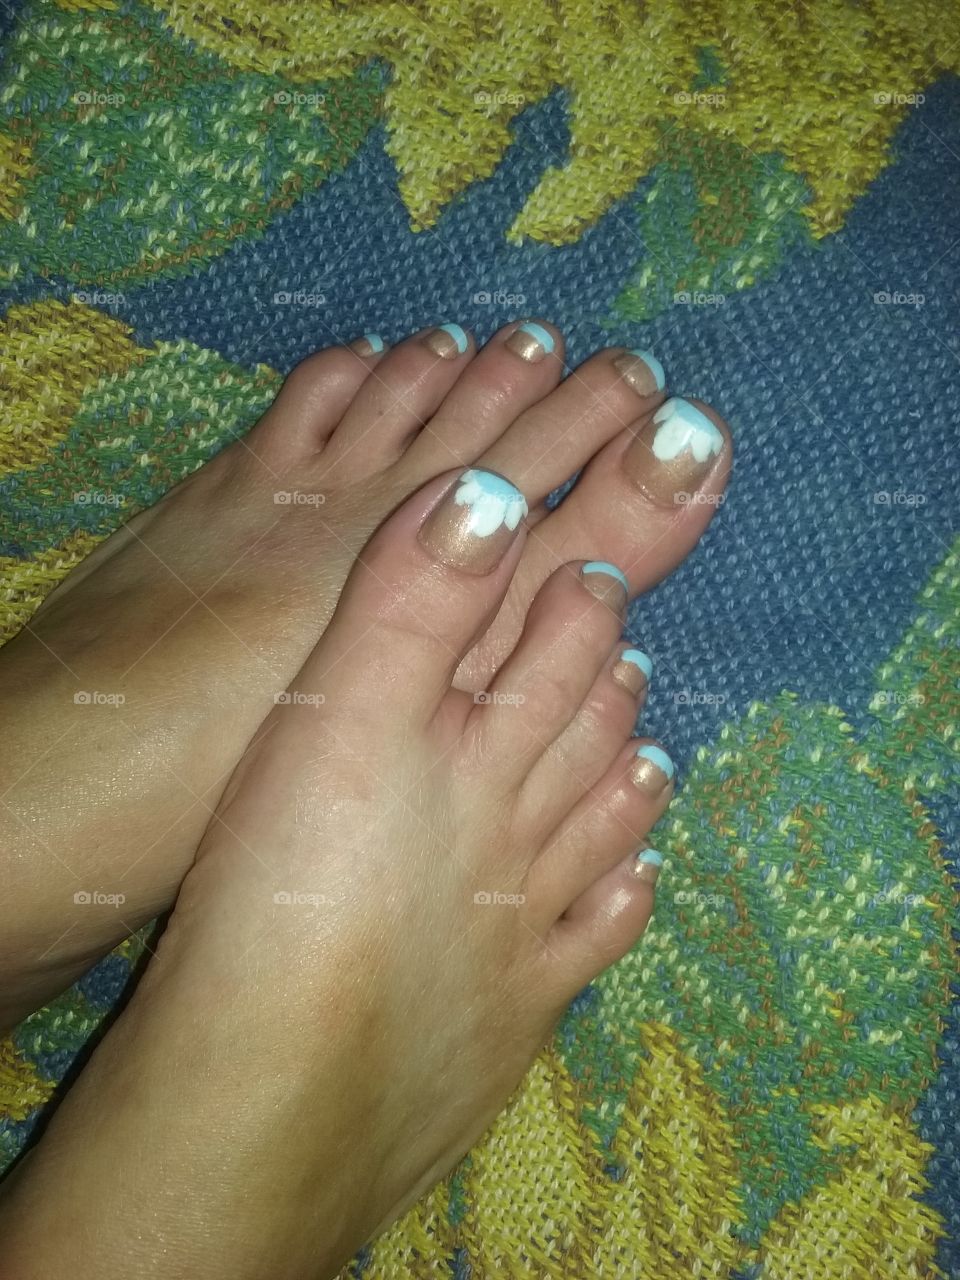 I love painting my toenails